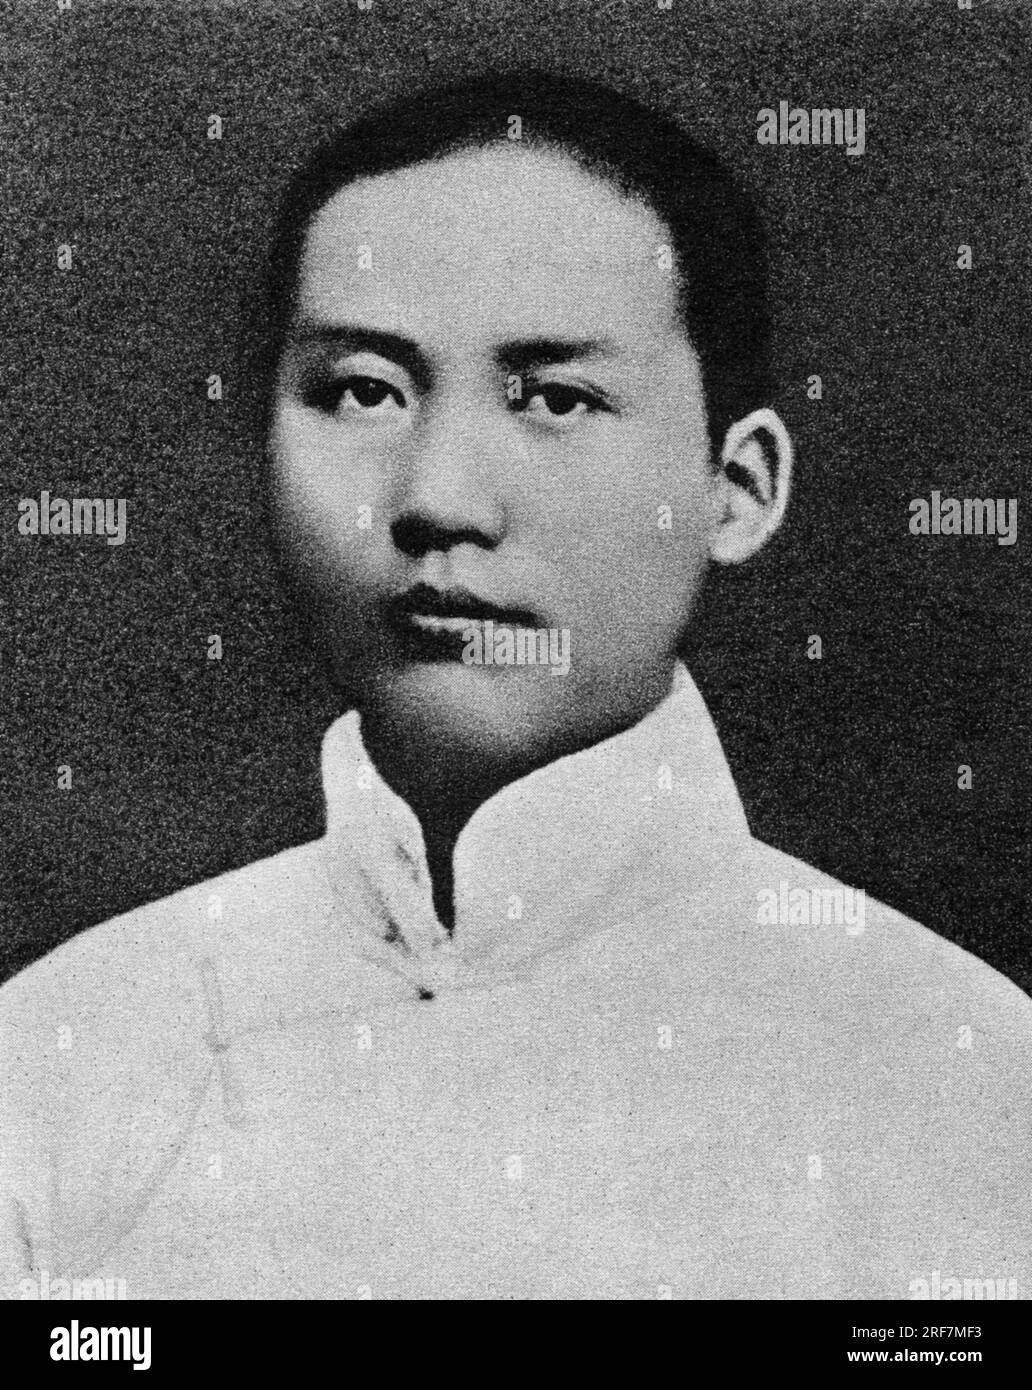 Portrait du Futur Chef d'etat chinois Mao Tse-Tung (Mao Ze-Dong ou Mao Zedong ou Mao Tse Toung ou Mao Tso Tong) (1893-1976), (1893-1976) jeune. Chine, Vers 1915. Stockfoto